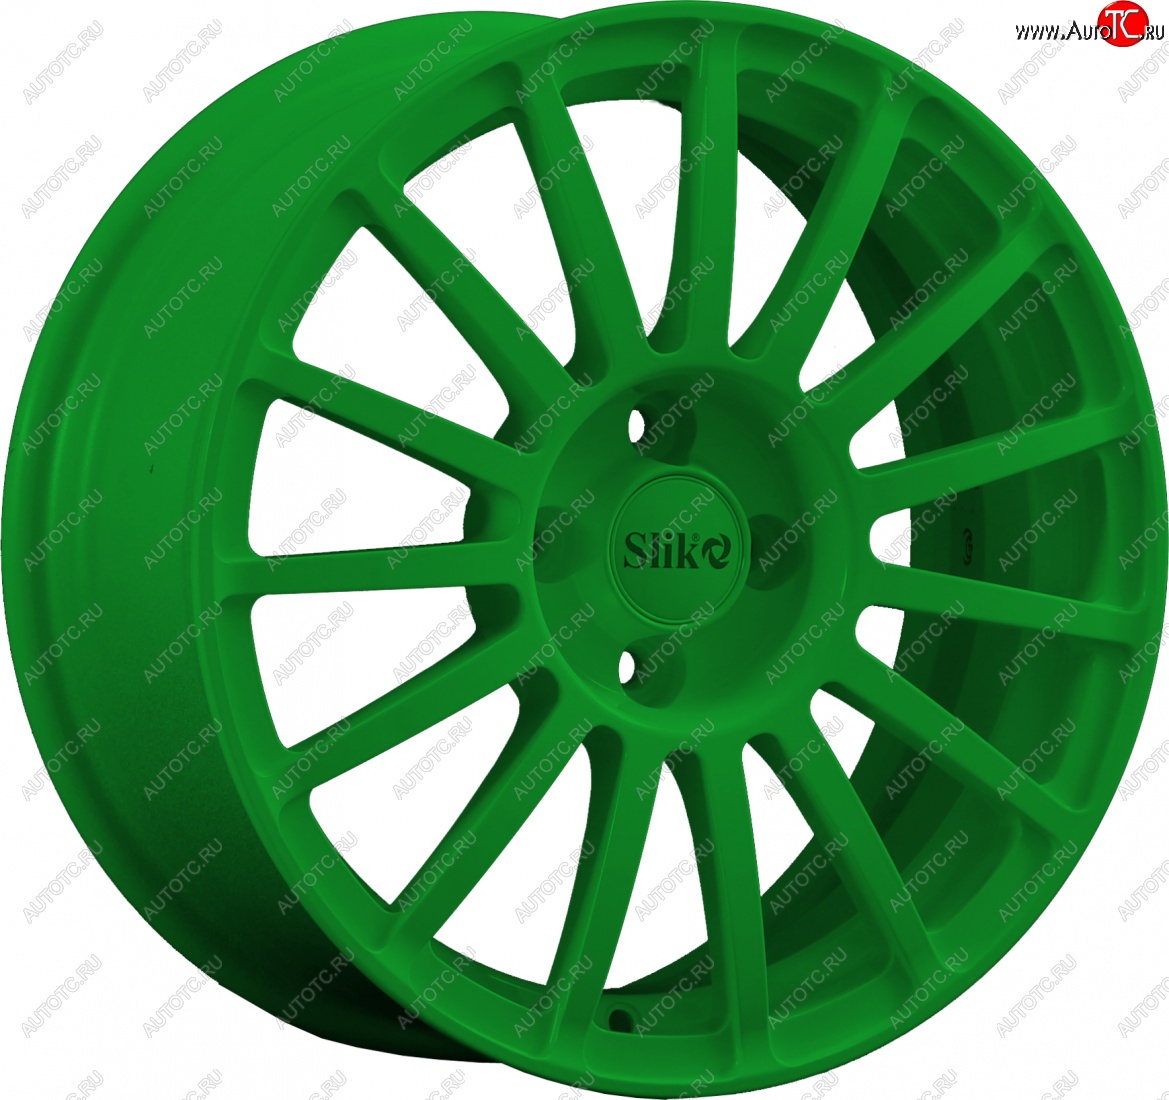 18 999 р. Кованый диск Slik classik R16x6.5 Зеленый (GREEN) 6.5x16   (Цвет: GREEN)